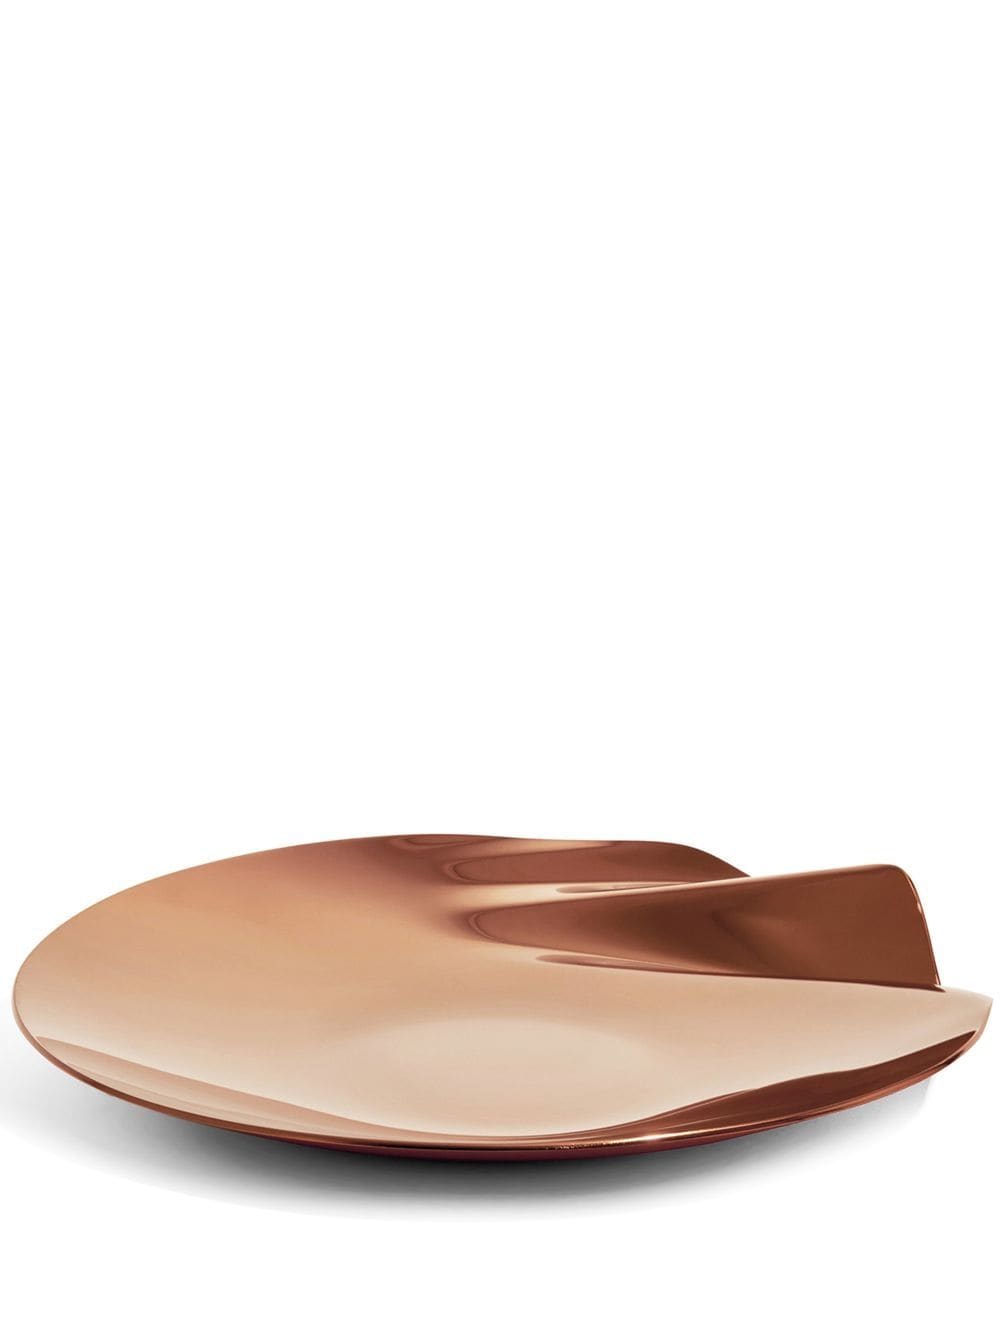 Zaha Hadid Design Serenity stainless steel platter - Brown von Zaha Hadid Design